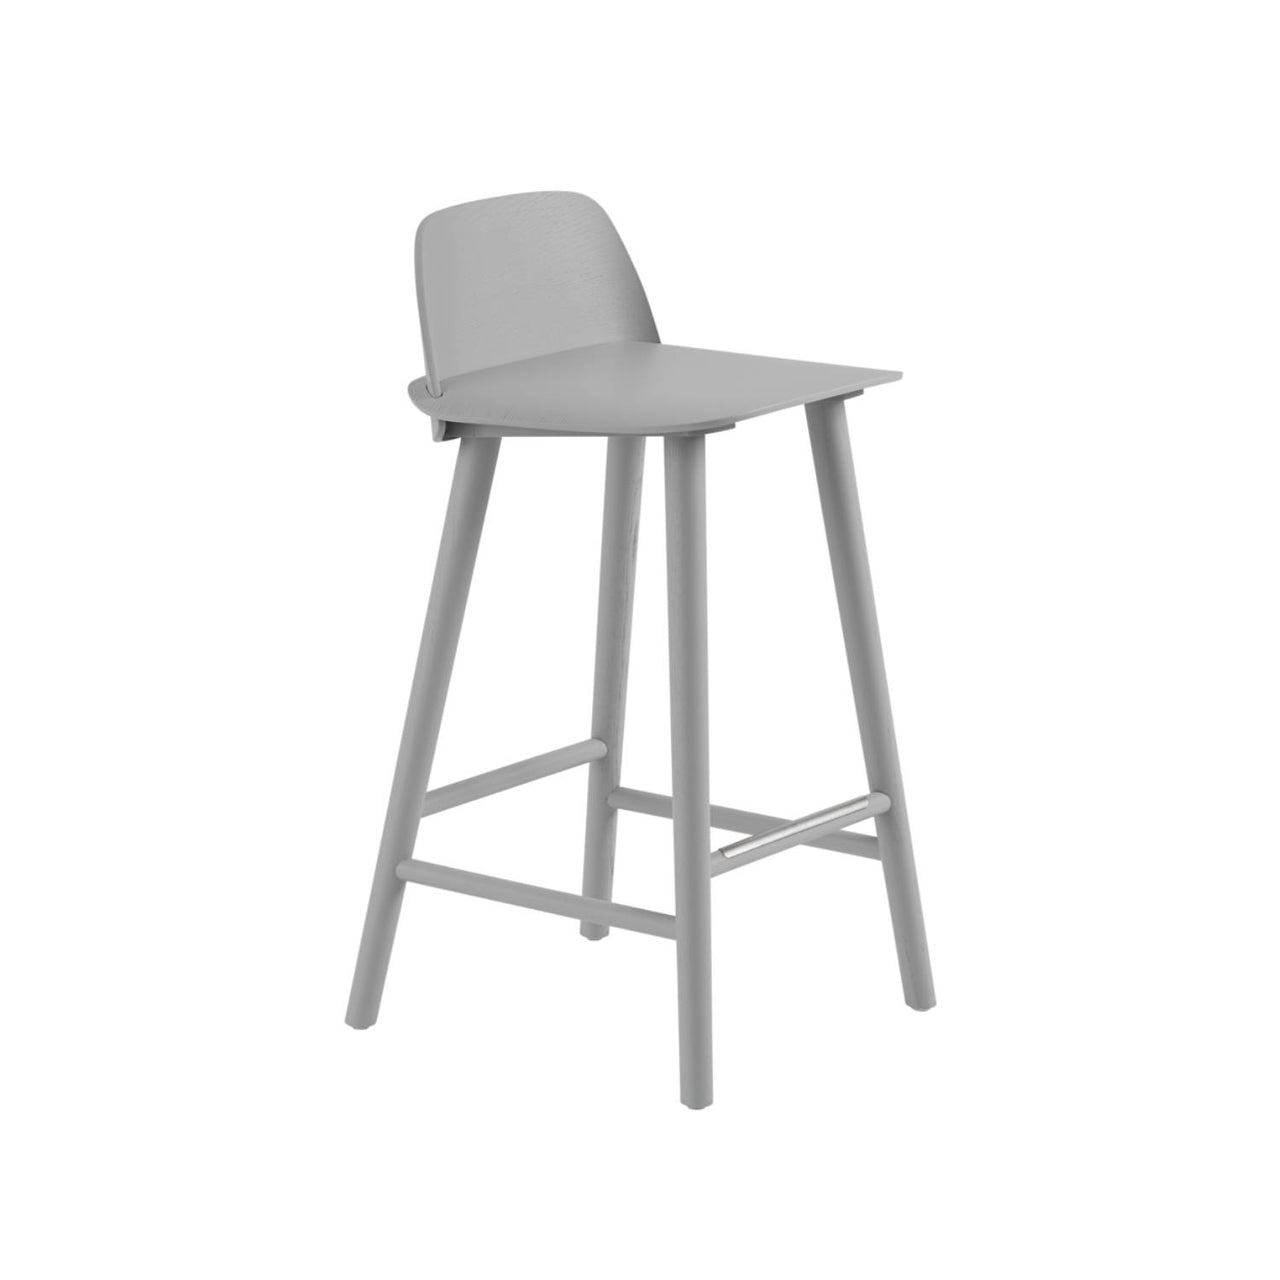 Nerd Bar + Counter Stool: Steel Footrest + Counter + Grey